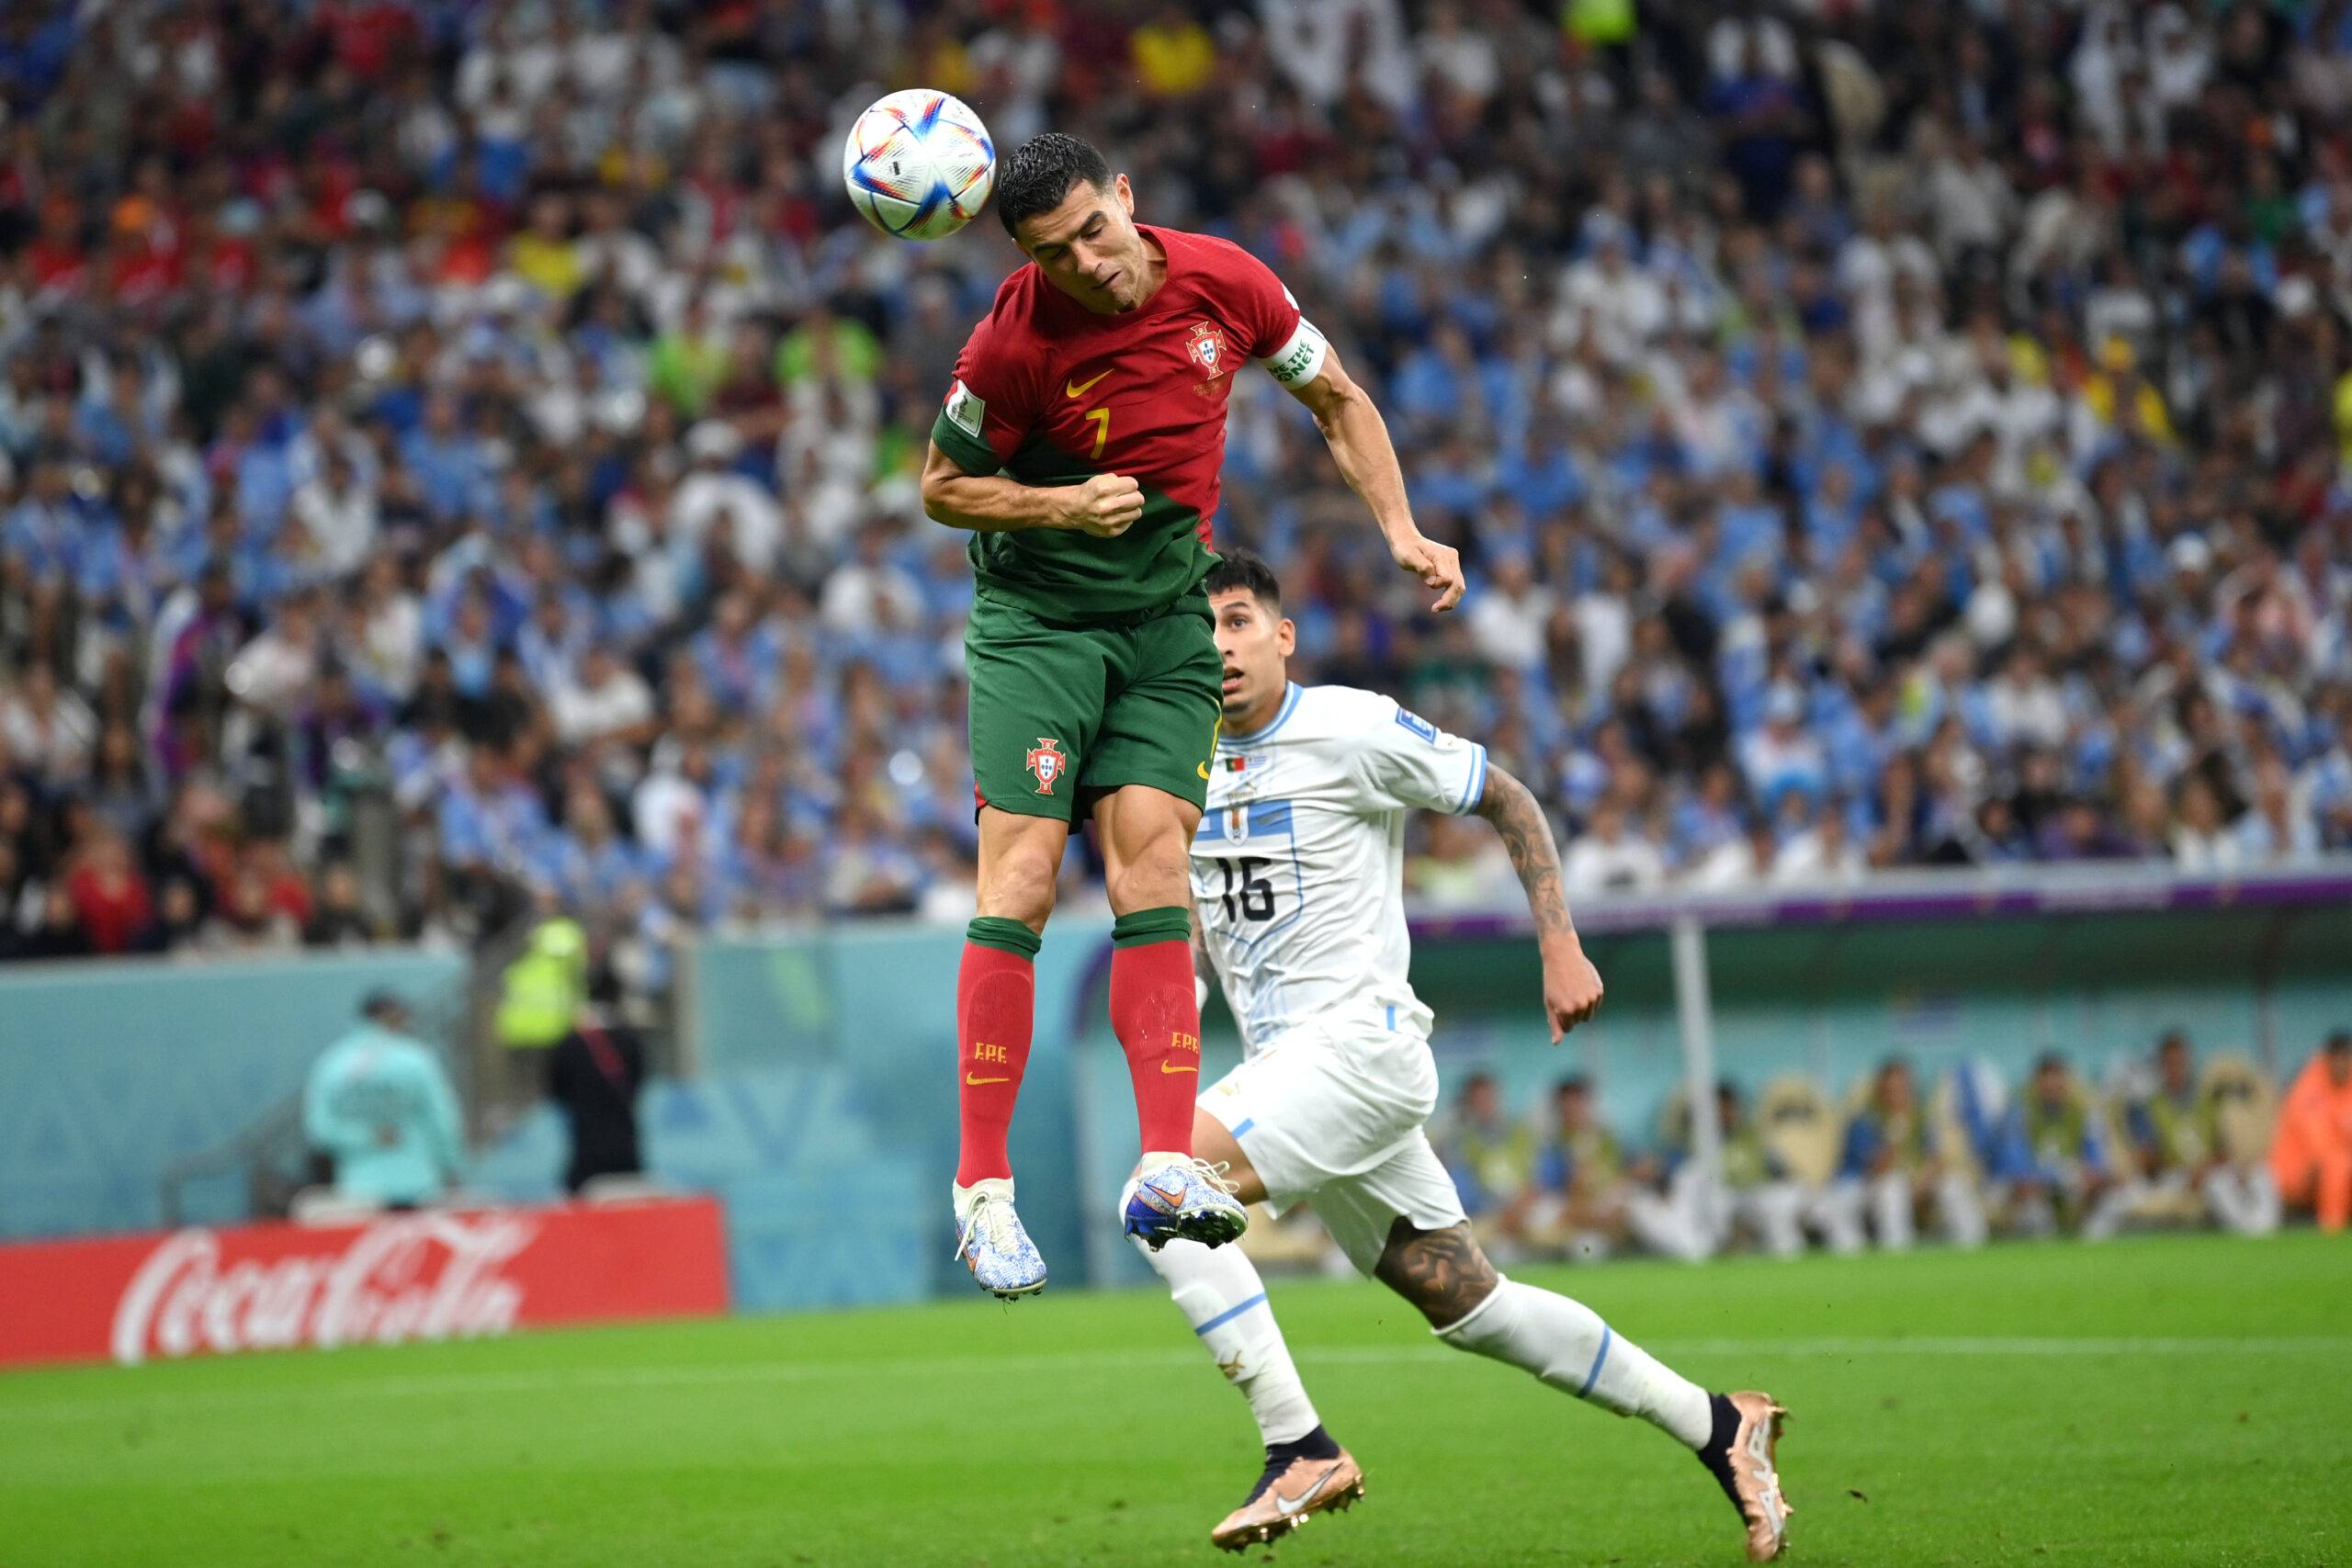 Adidas, who have sensor inside World Cup balls, confirm who scored Portugal's goal v Uruguay